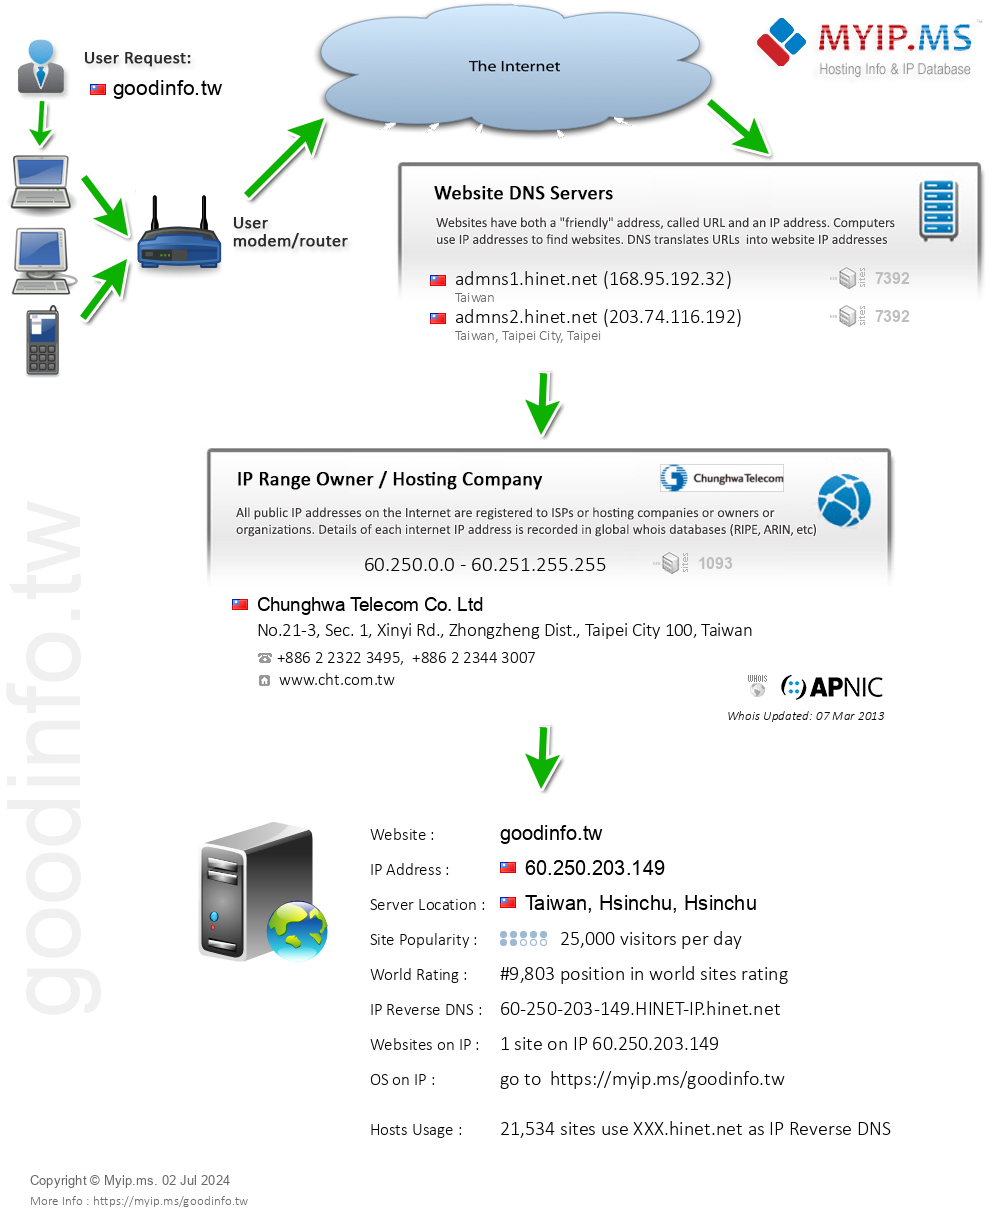 Goodinfo.tw - Website Hosting Visual IP Diagram